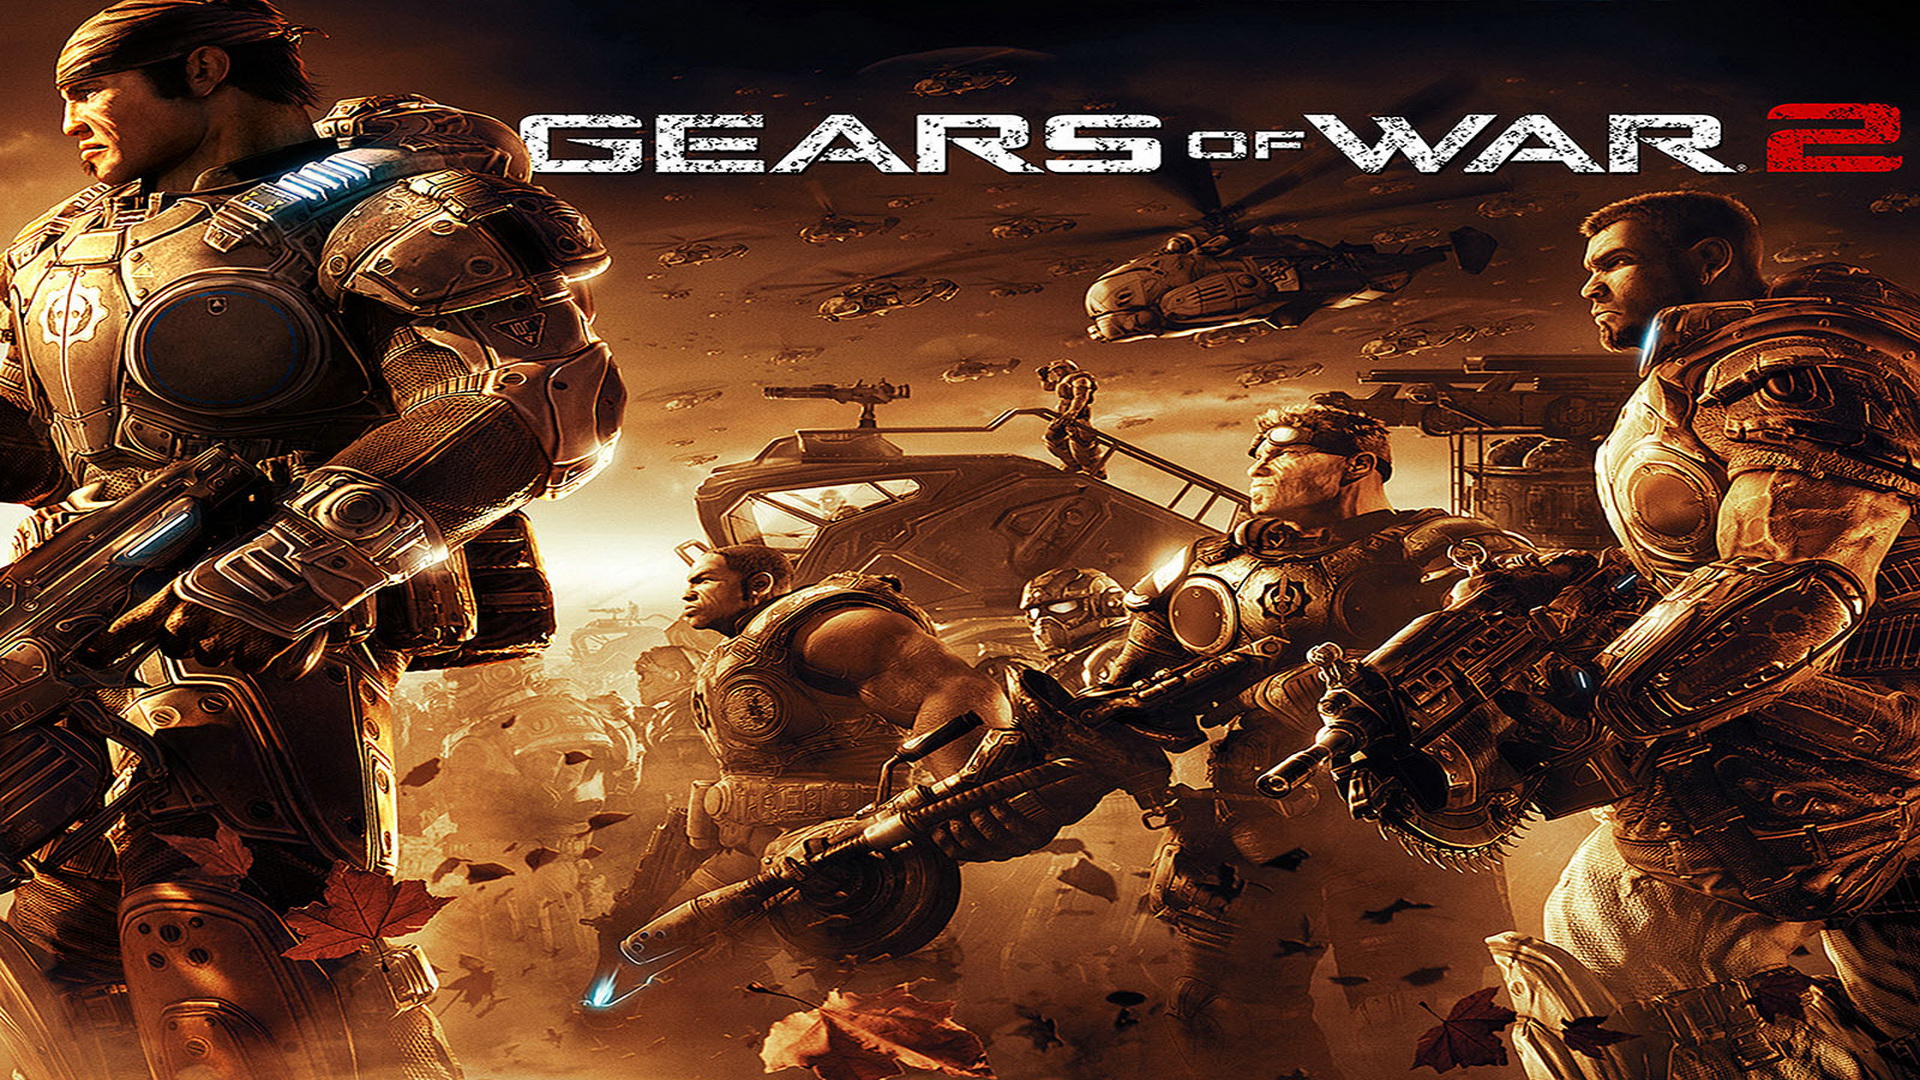 gears of war 2 HD Wallpapers Games Wallpaper Game HD Wallpaper